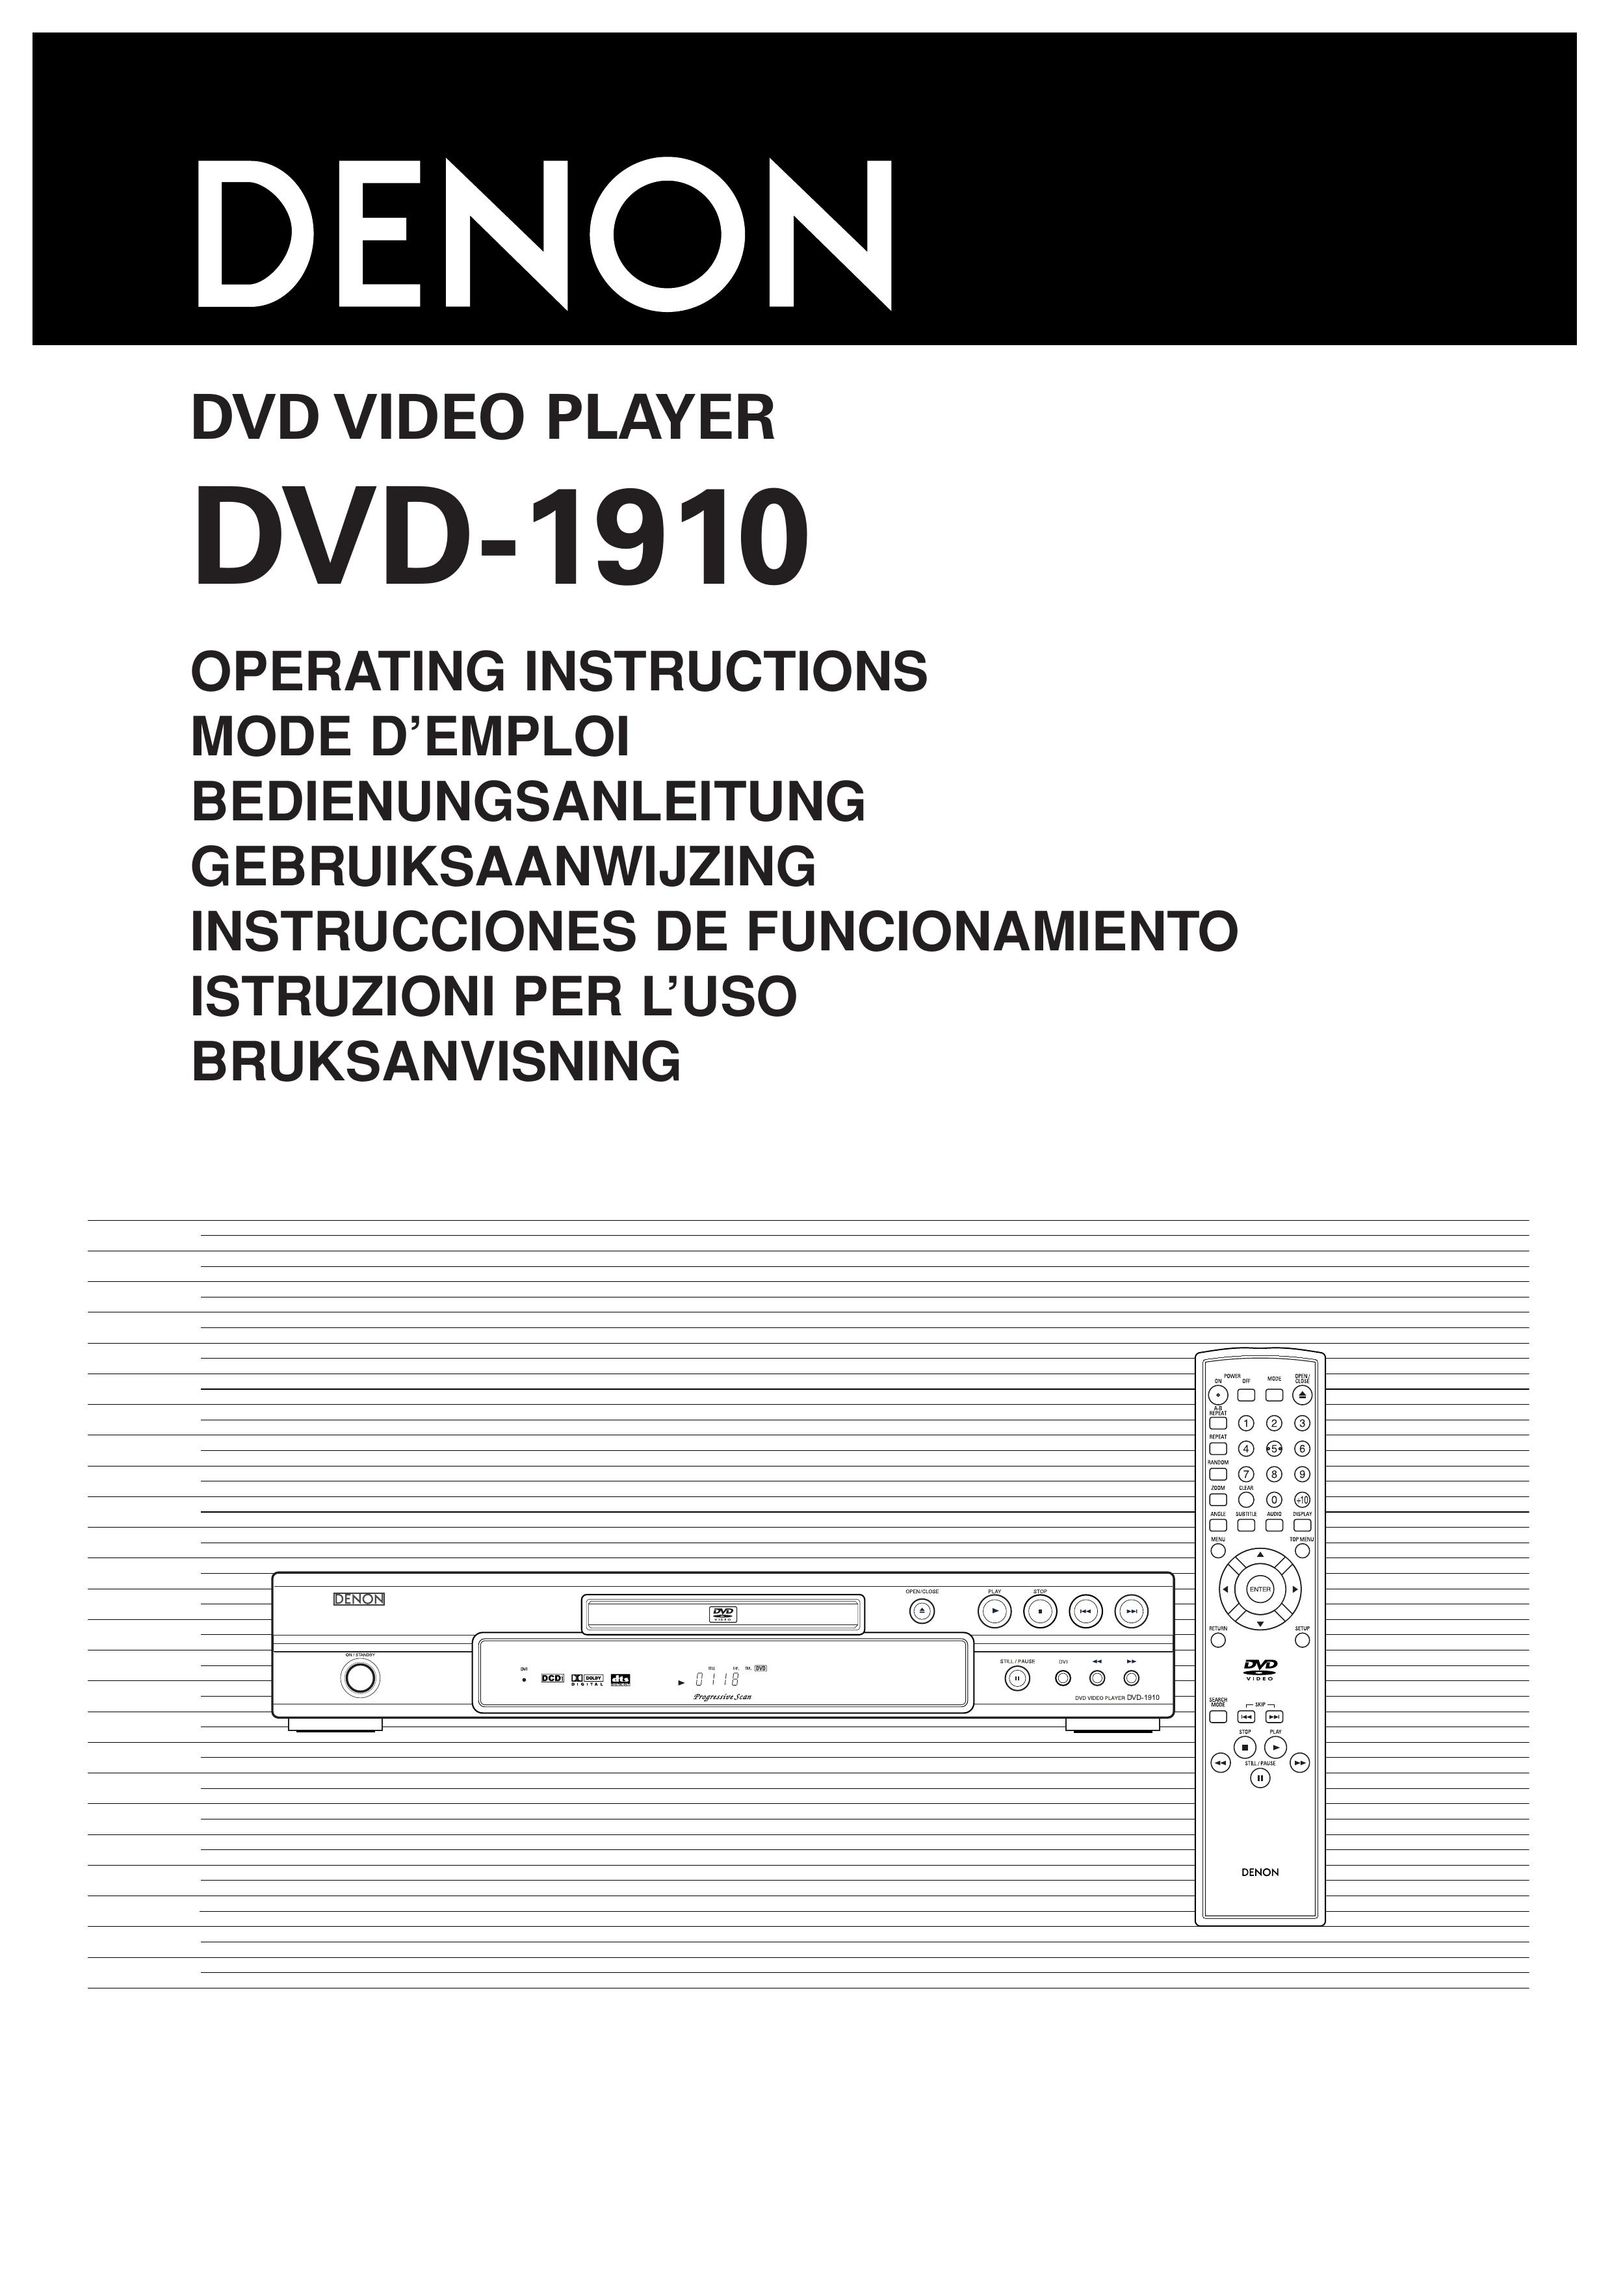 Denon DVD-1910 DVD Player User Manual